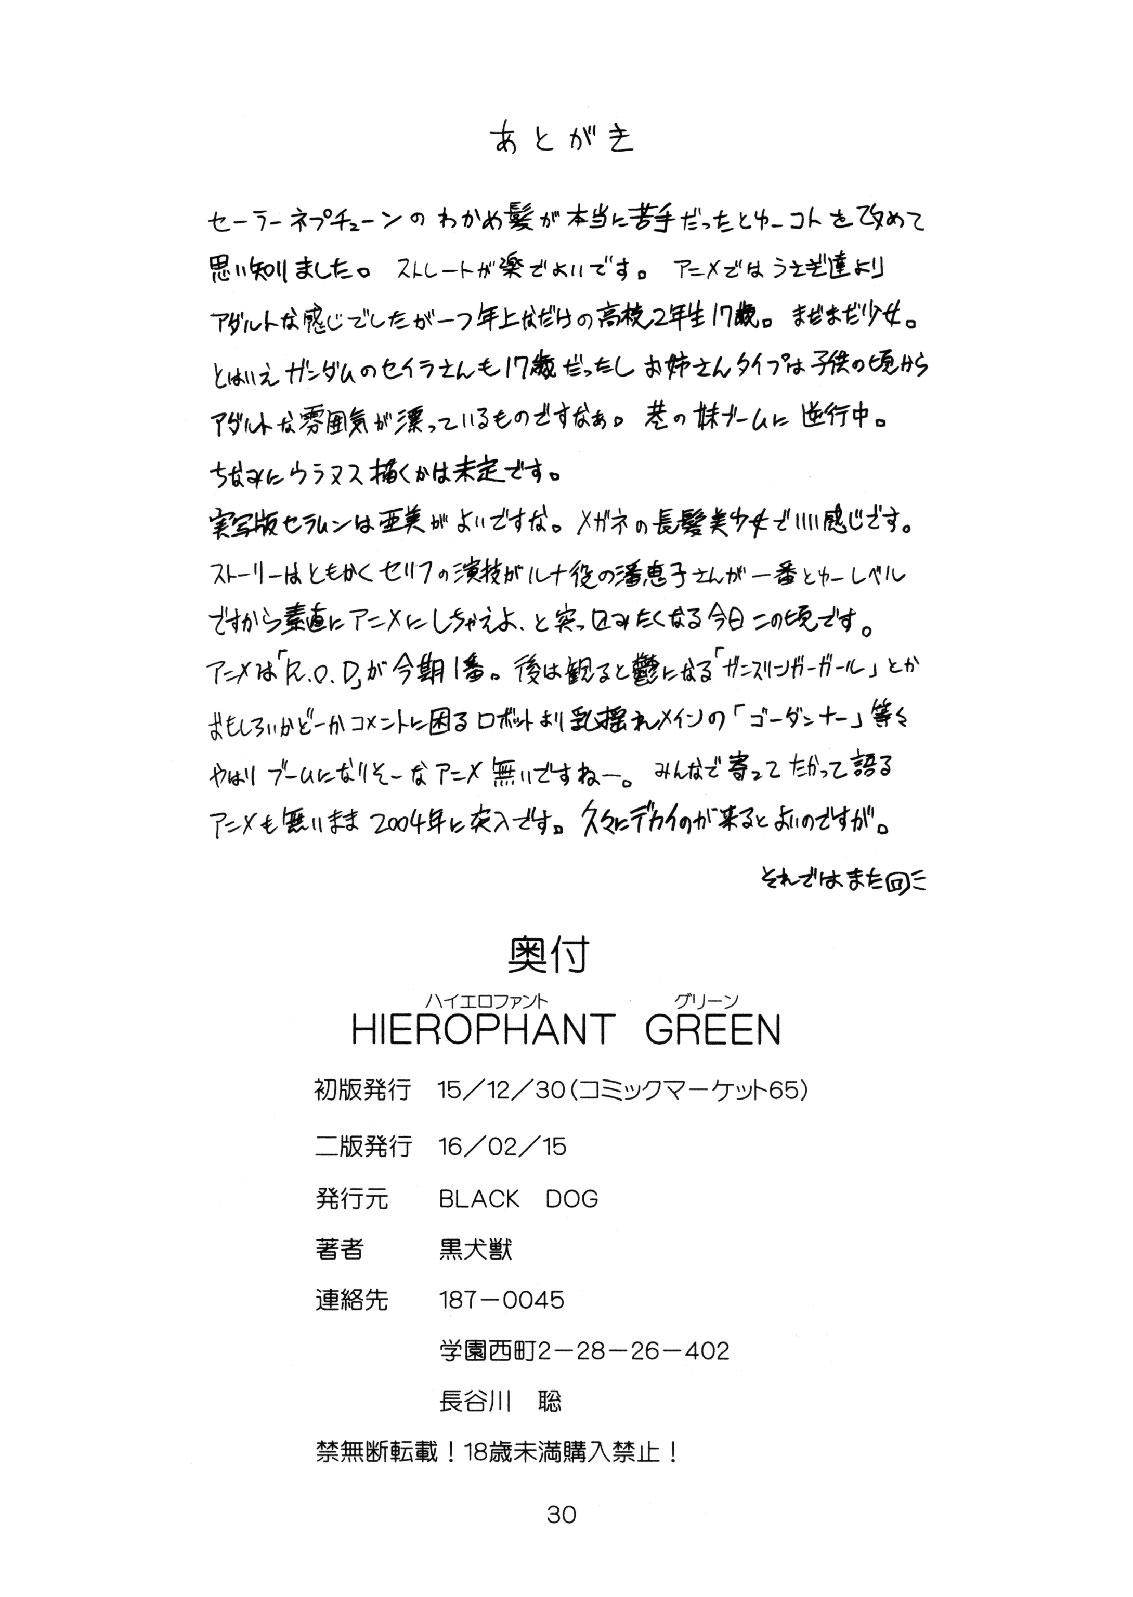 Hierophant Green 29